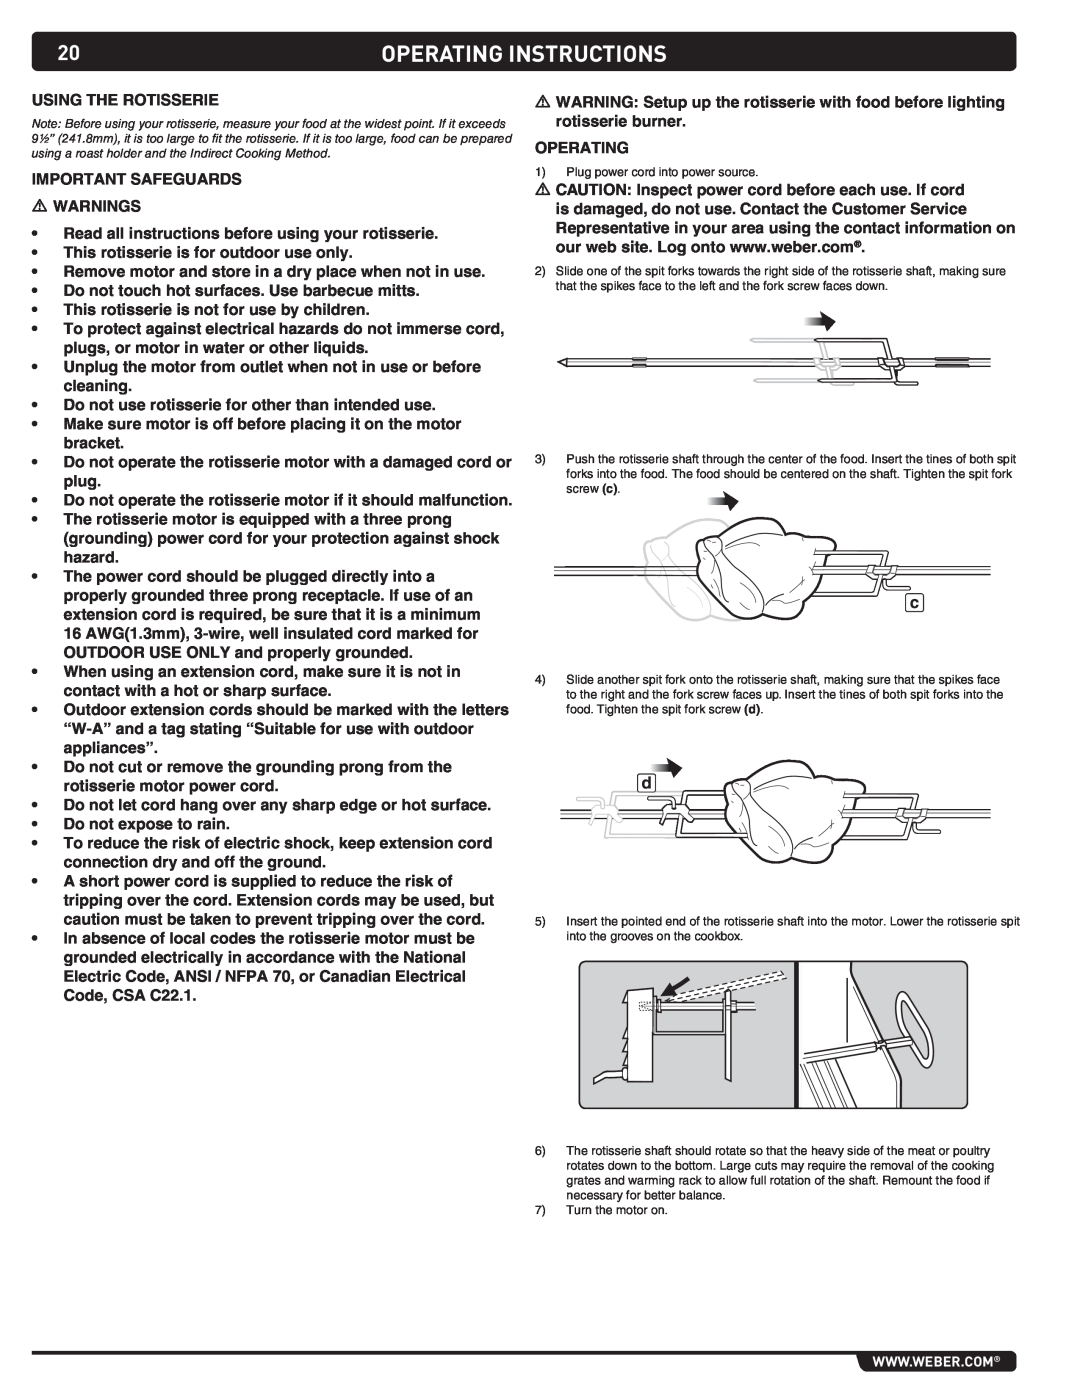 Weber S-460 manual Using the Rotisserie 